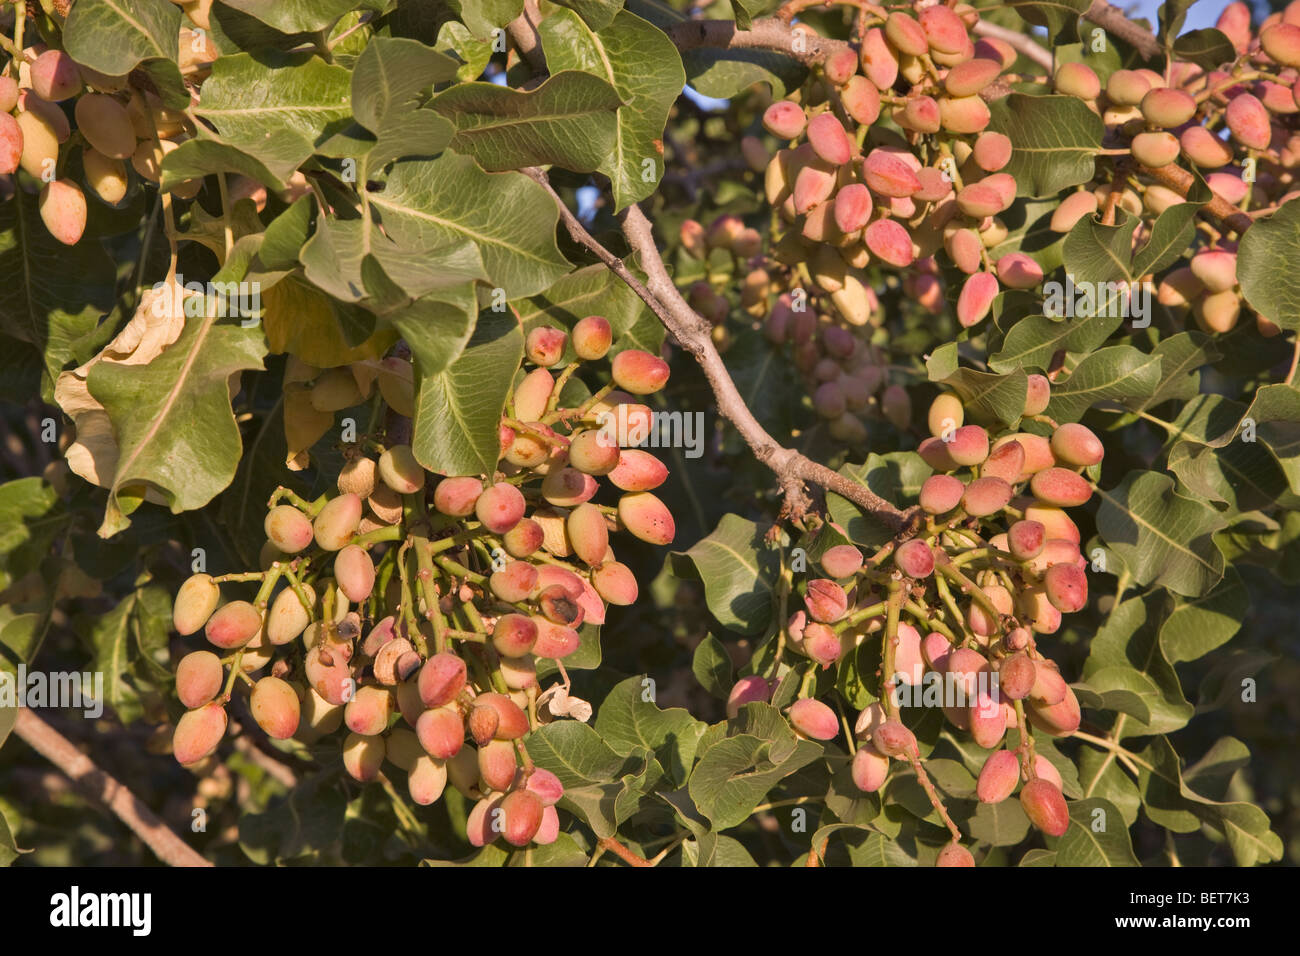 Pistachio Nuts maturing on branches 'Pistachio vera'. Stock Photo